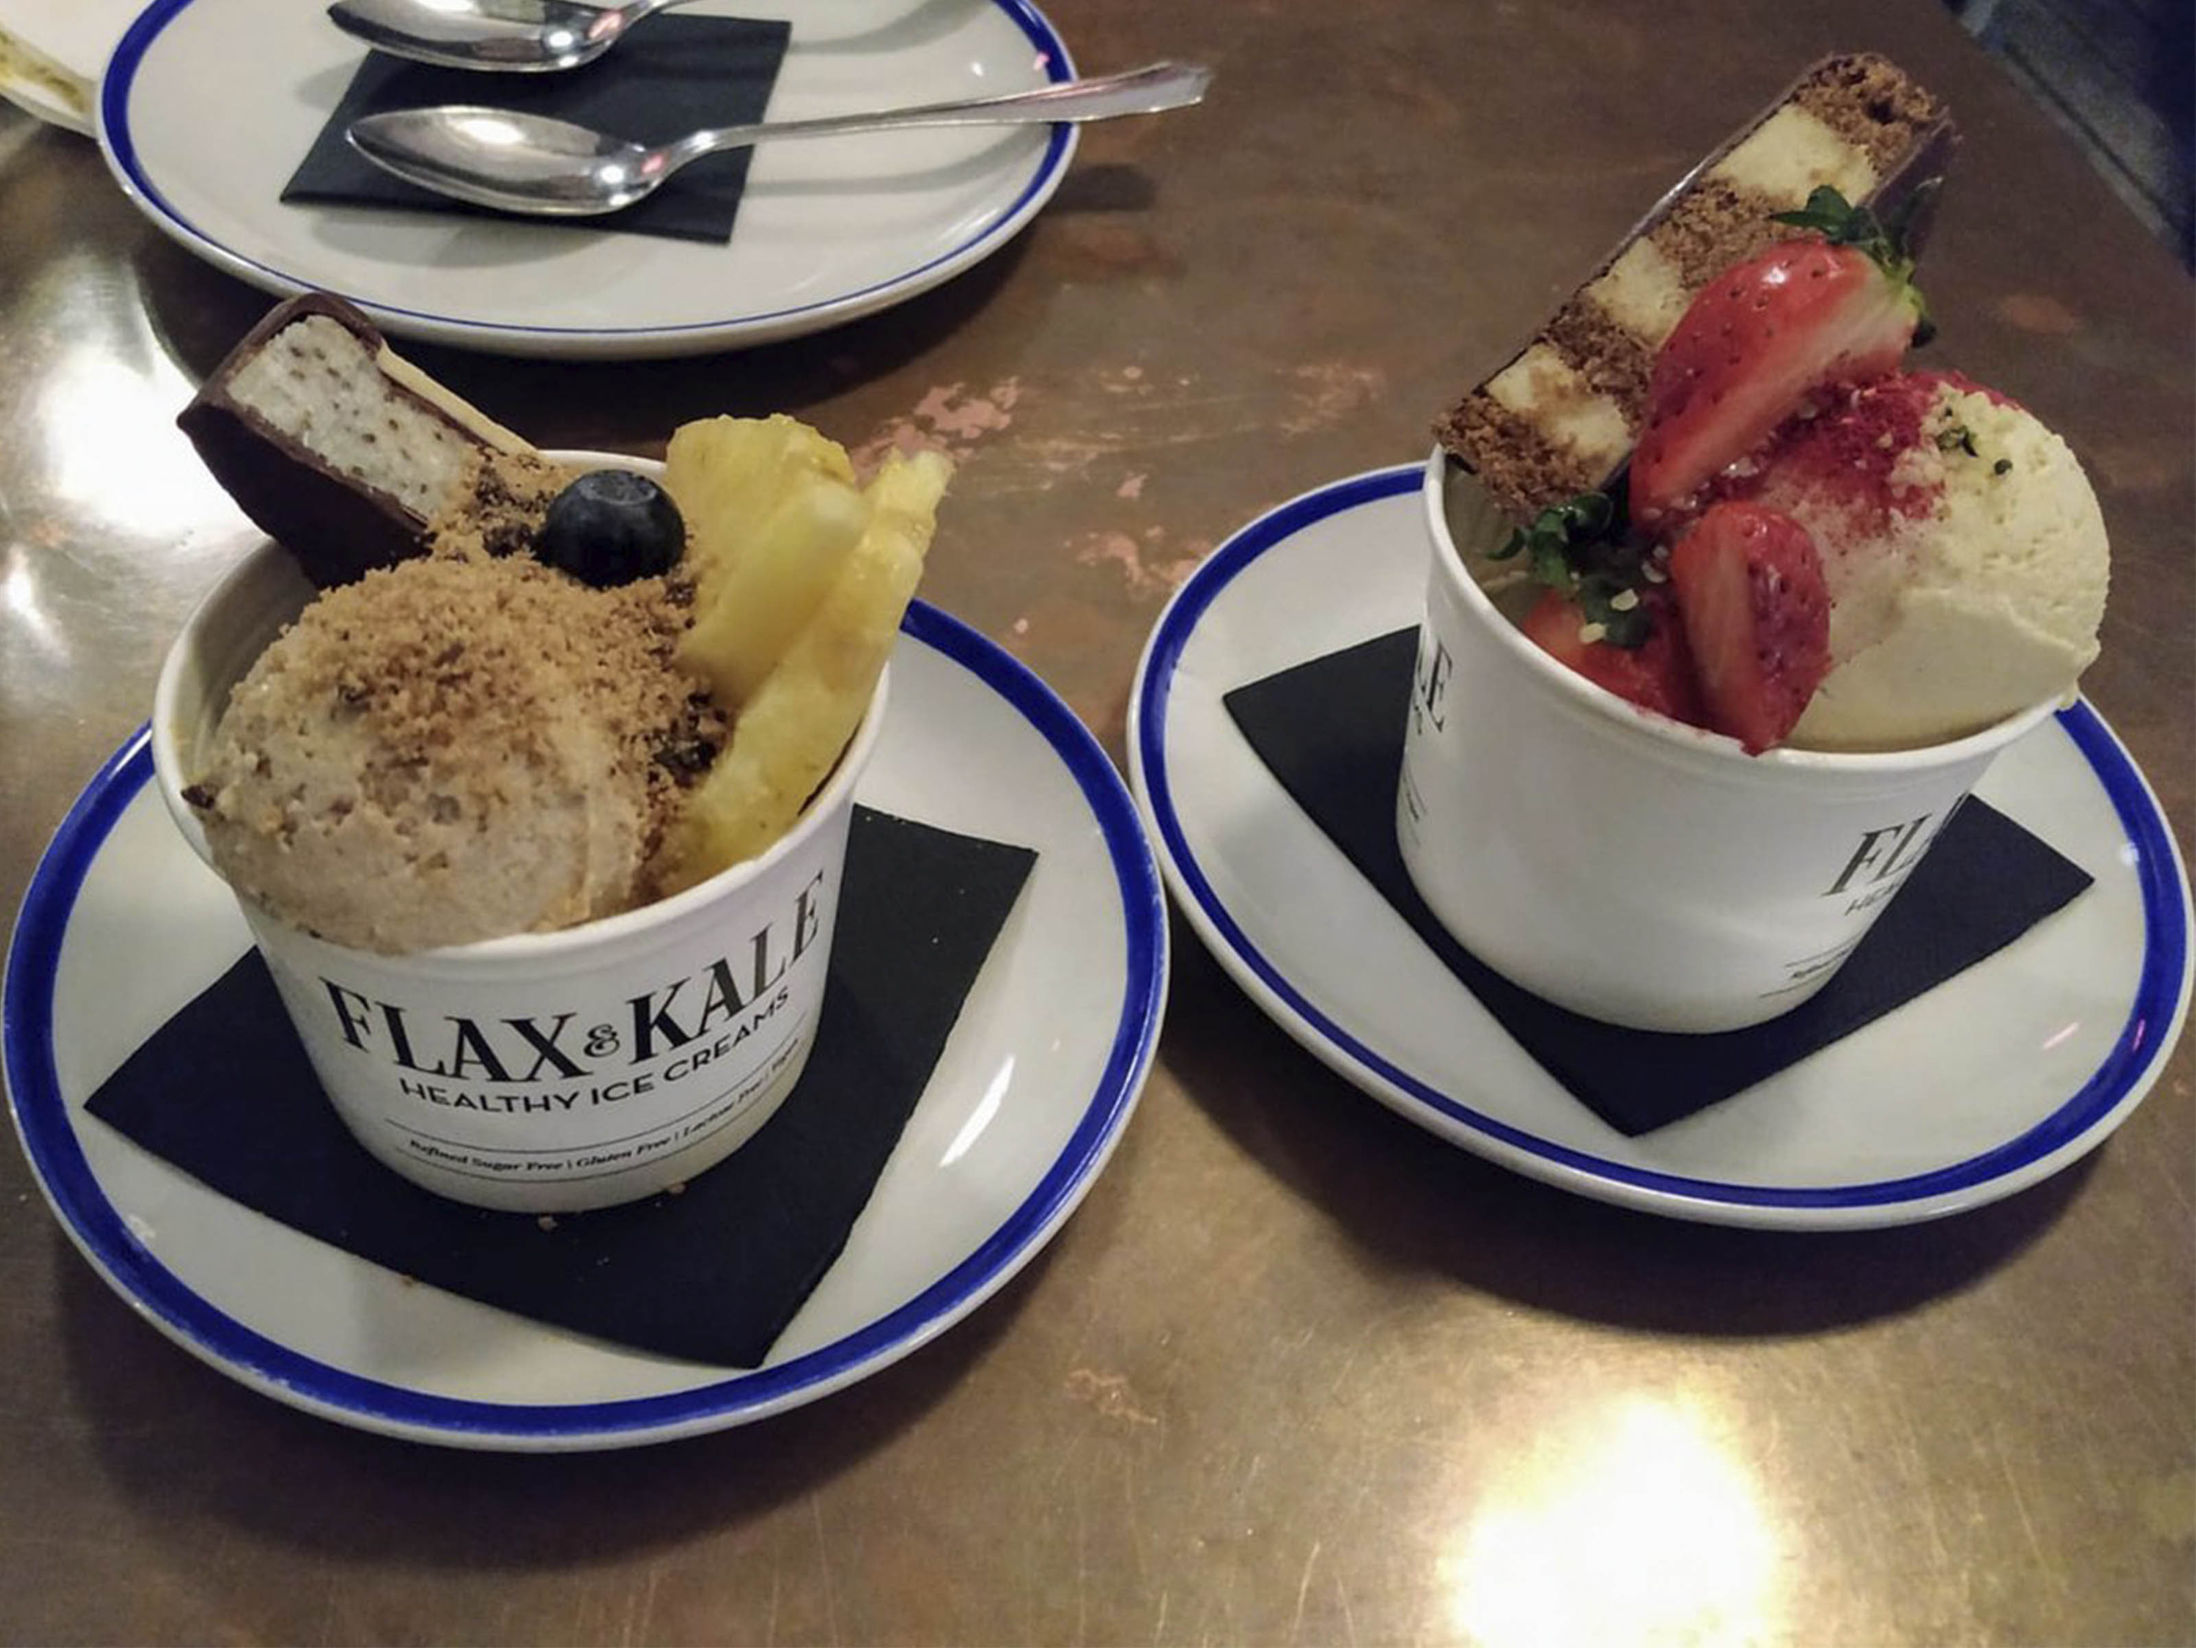 Best Restaurants in Barcelona - Flax & Kale